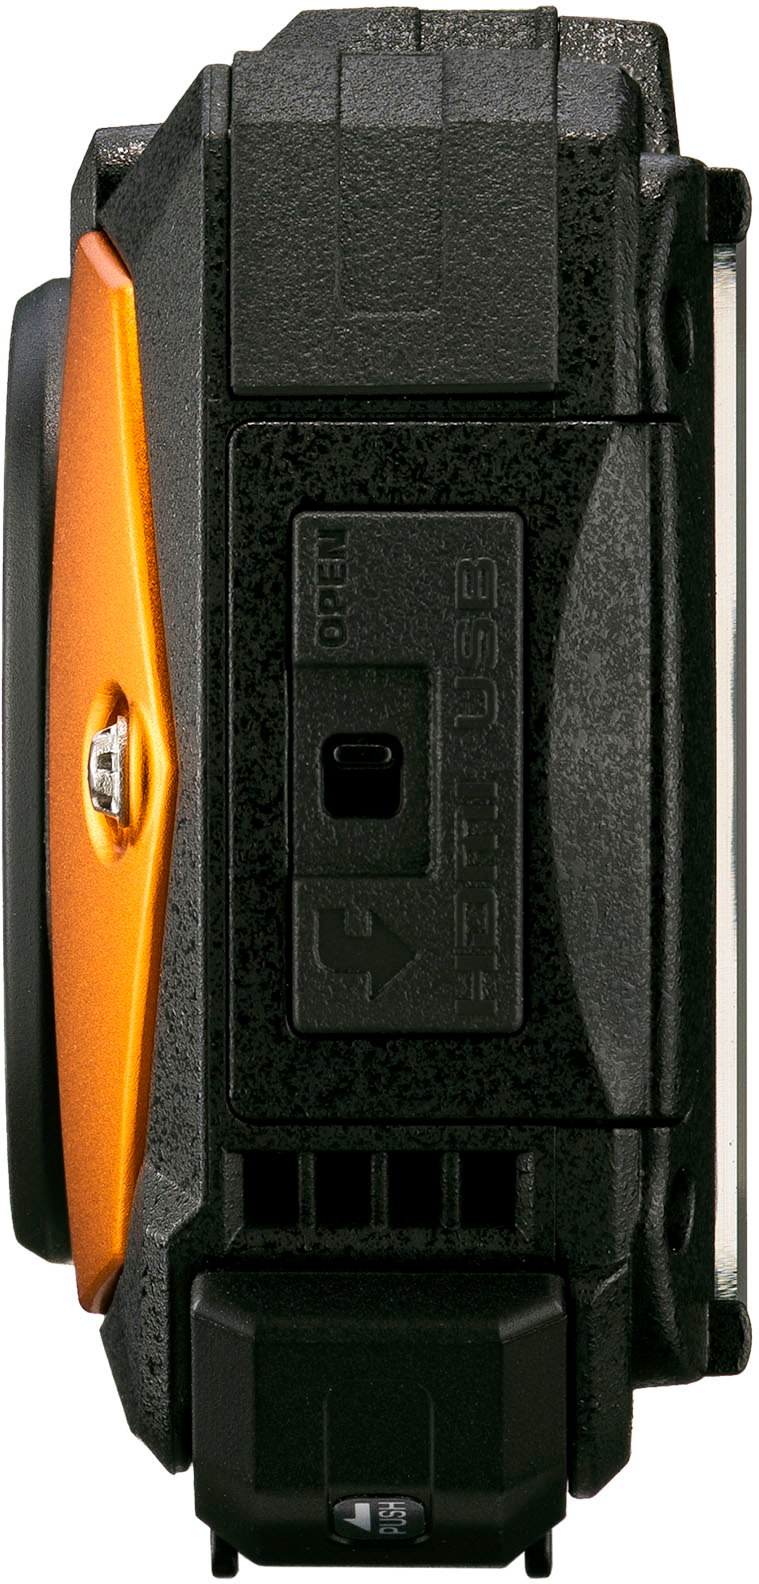 Ricoh WG-80 16.0 Megapixel Waterproof Digital Camera Orange 03128